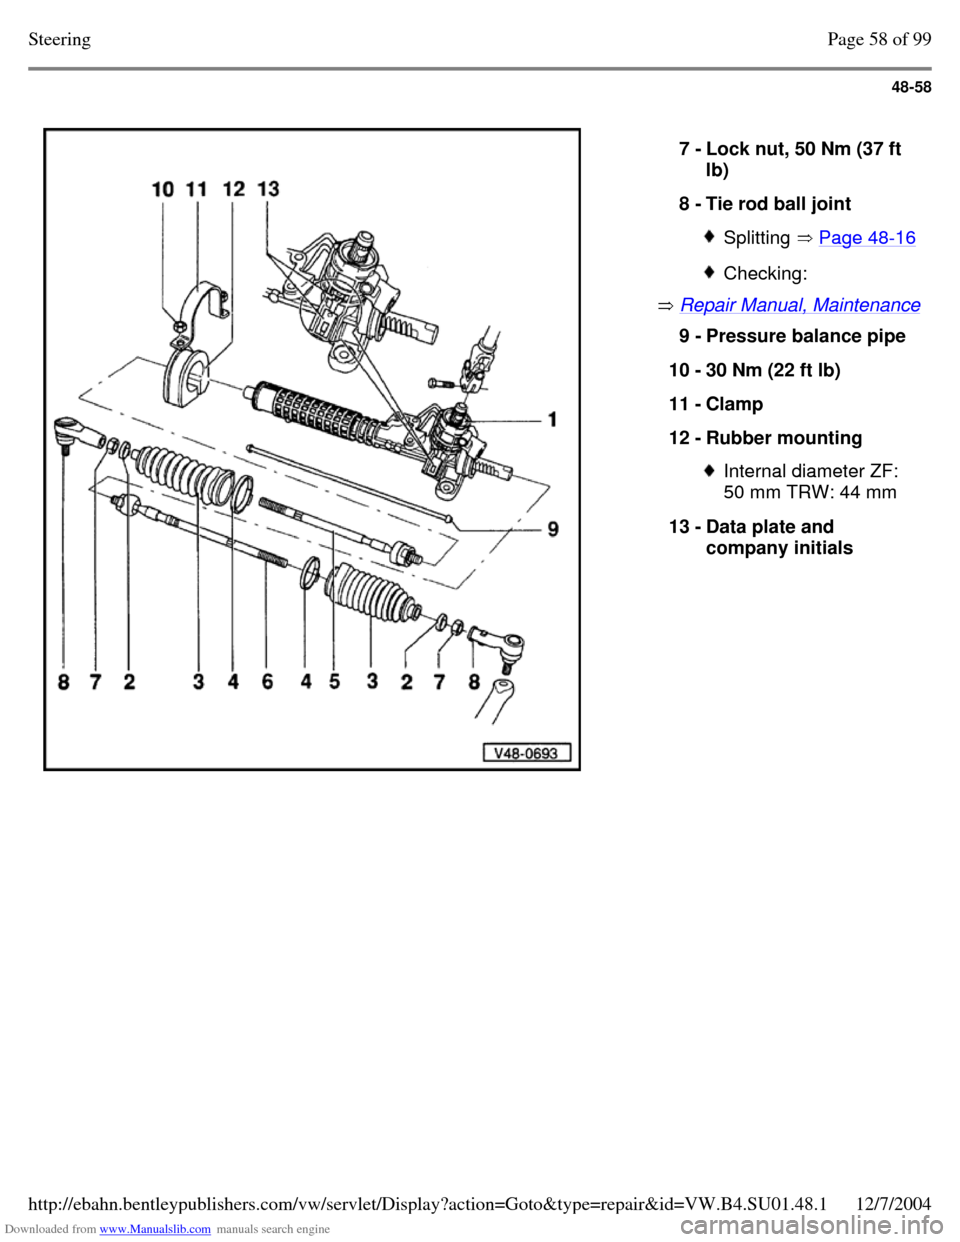 VOLKSWAGEN PASSAT 1997 B3, B4 / 3.G Service Workshop Manual Downloaded from www.Manualslib.com manuals search engine 48-58
   
 Repair Manual, Maintenance  7 - Lock nut, 50 Nm (37 ft 
lb) 
8 - Tie rod ball joint  Splitting  Page 48-16  Checking: 9 - Pressure b